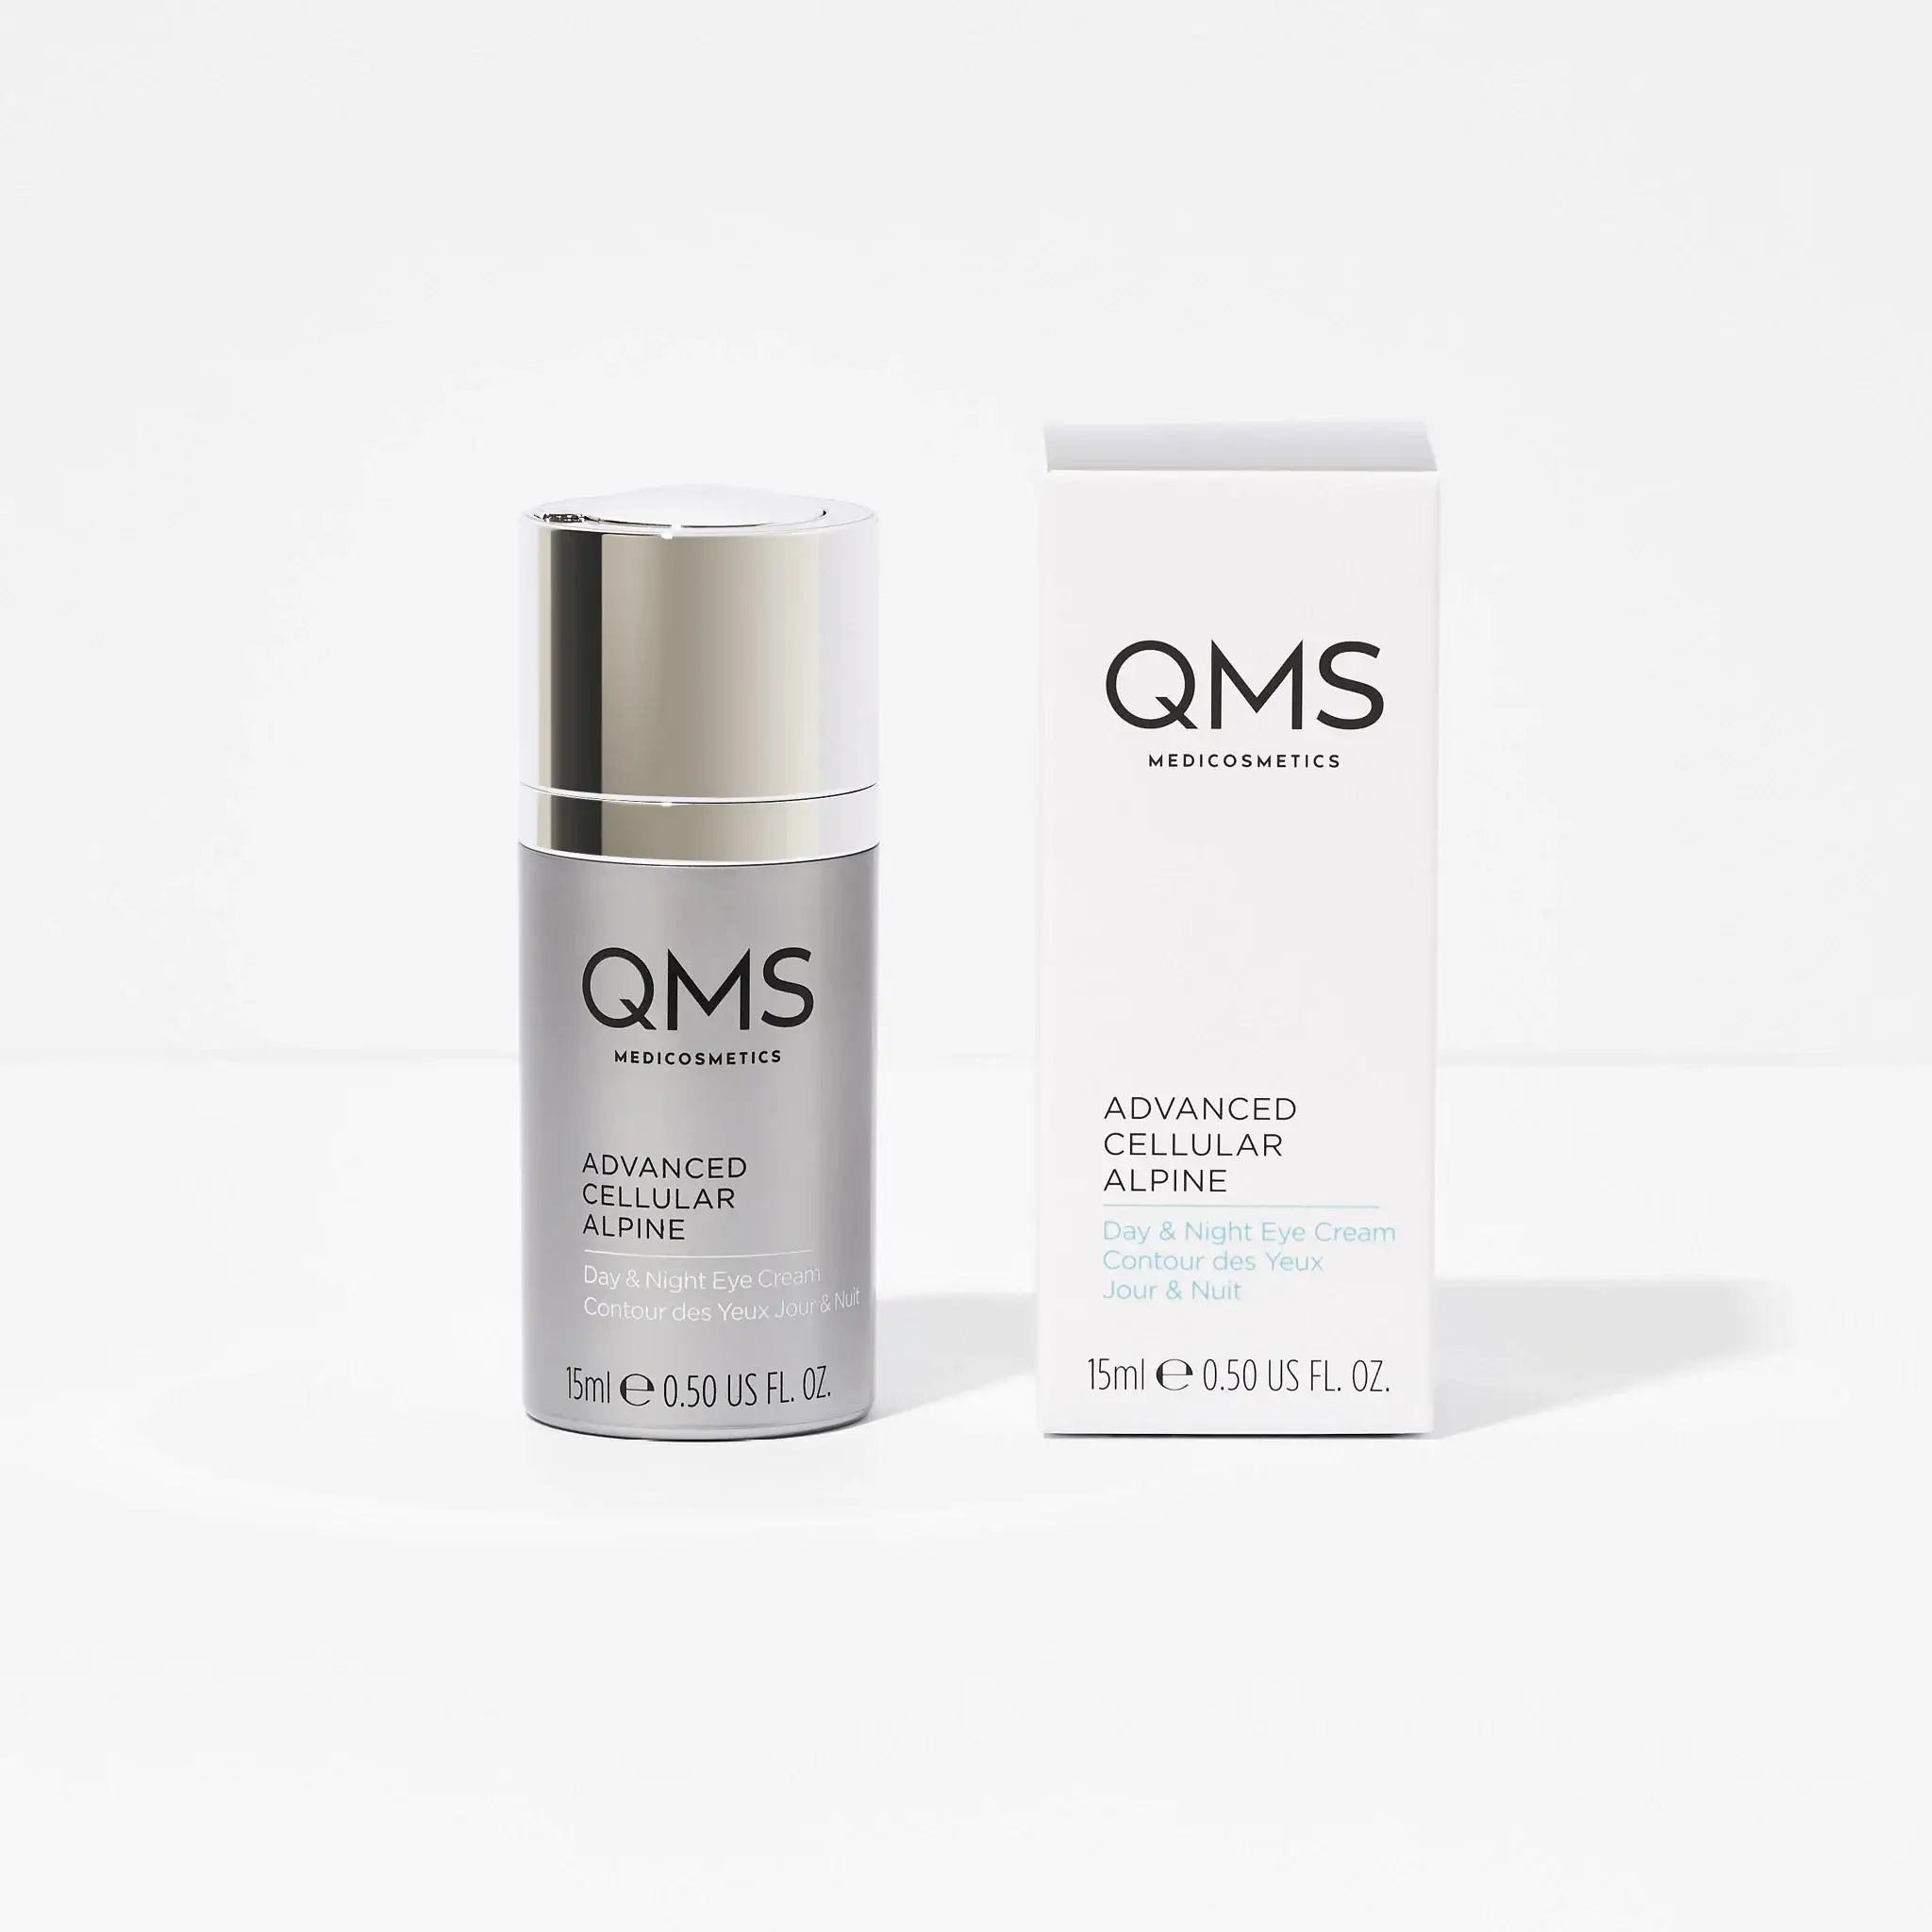 QMS Medicosmetiecs Advanced Cellular Alpine 15 ml